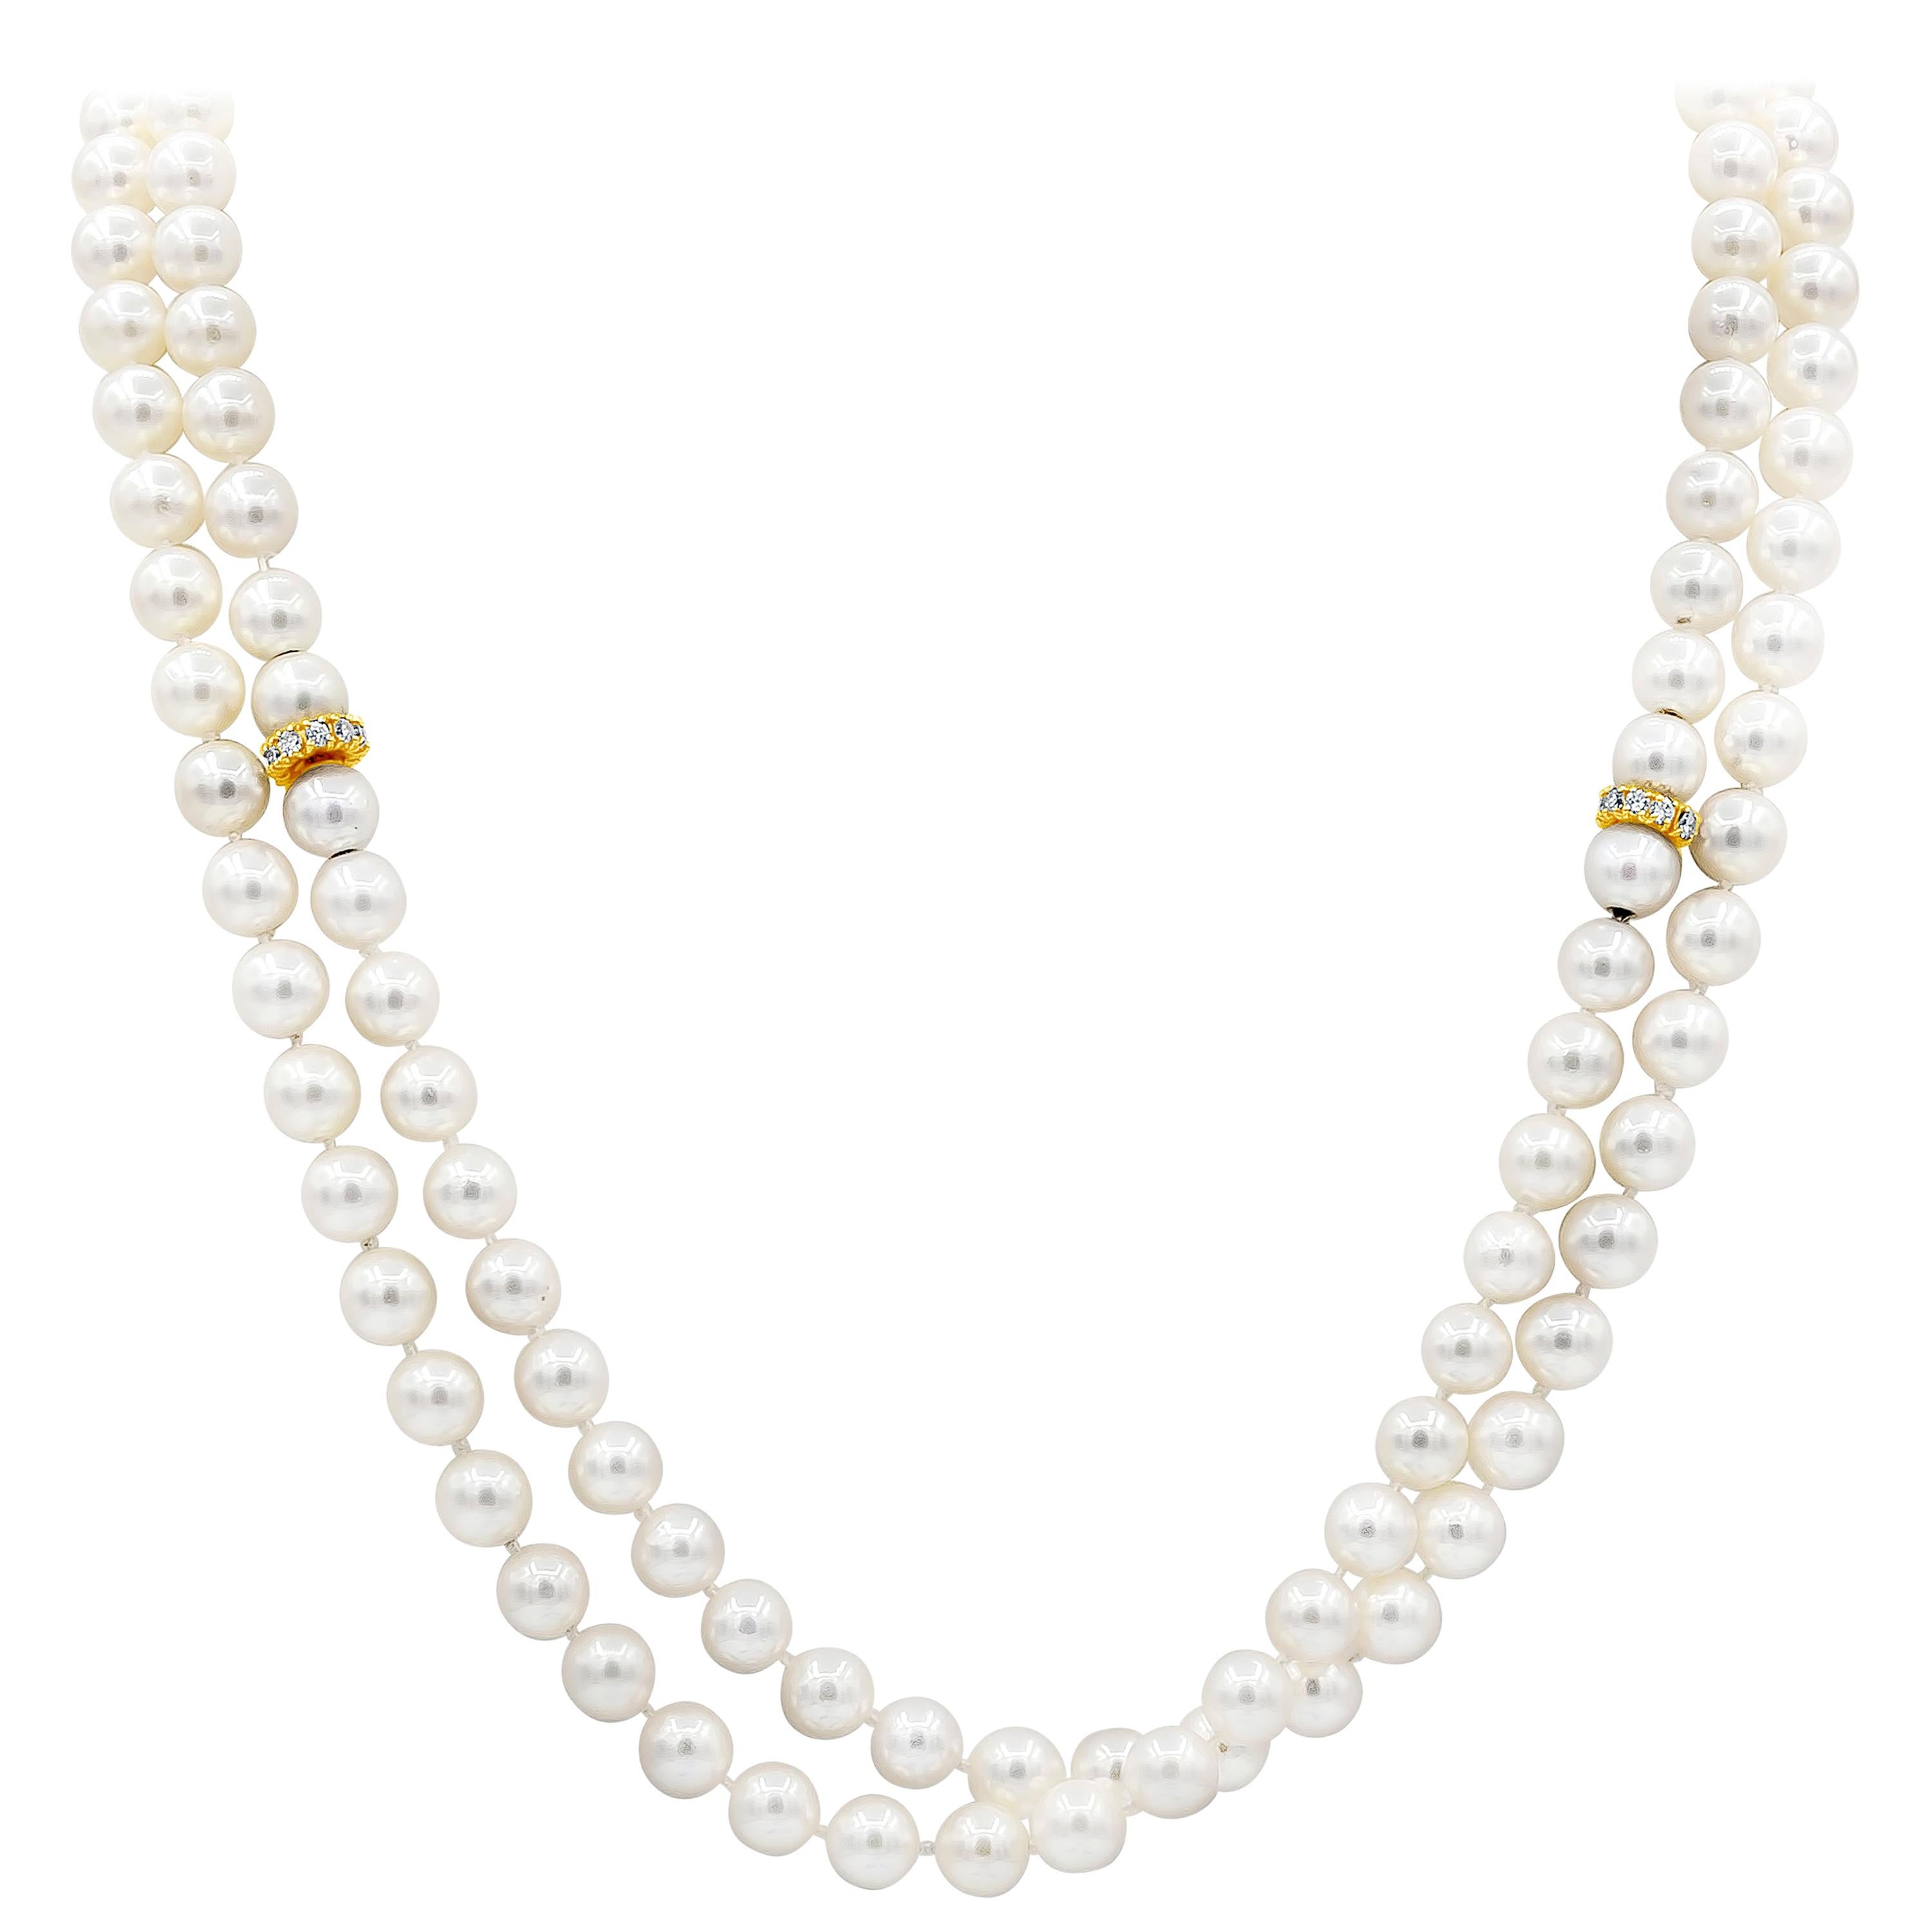 Roman Malakov 1 Carats Total Diamond & Pearl Collapsible Multi-Strand Necklace